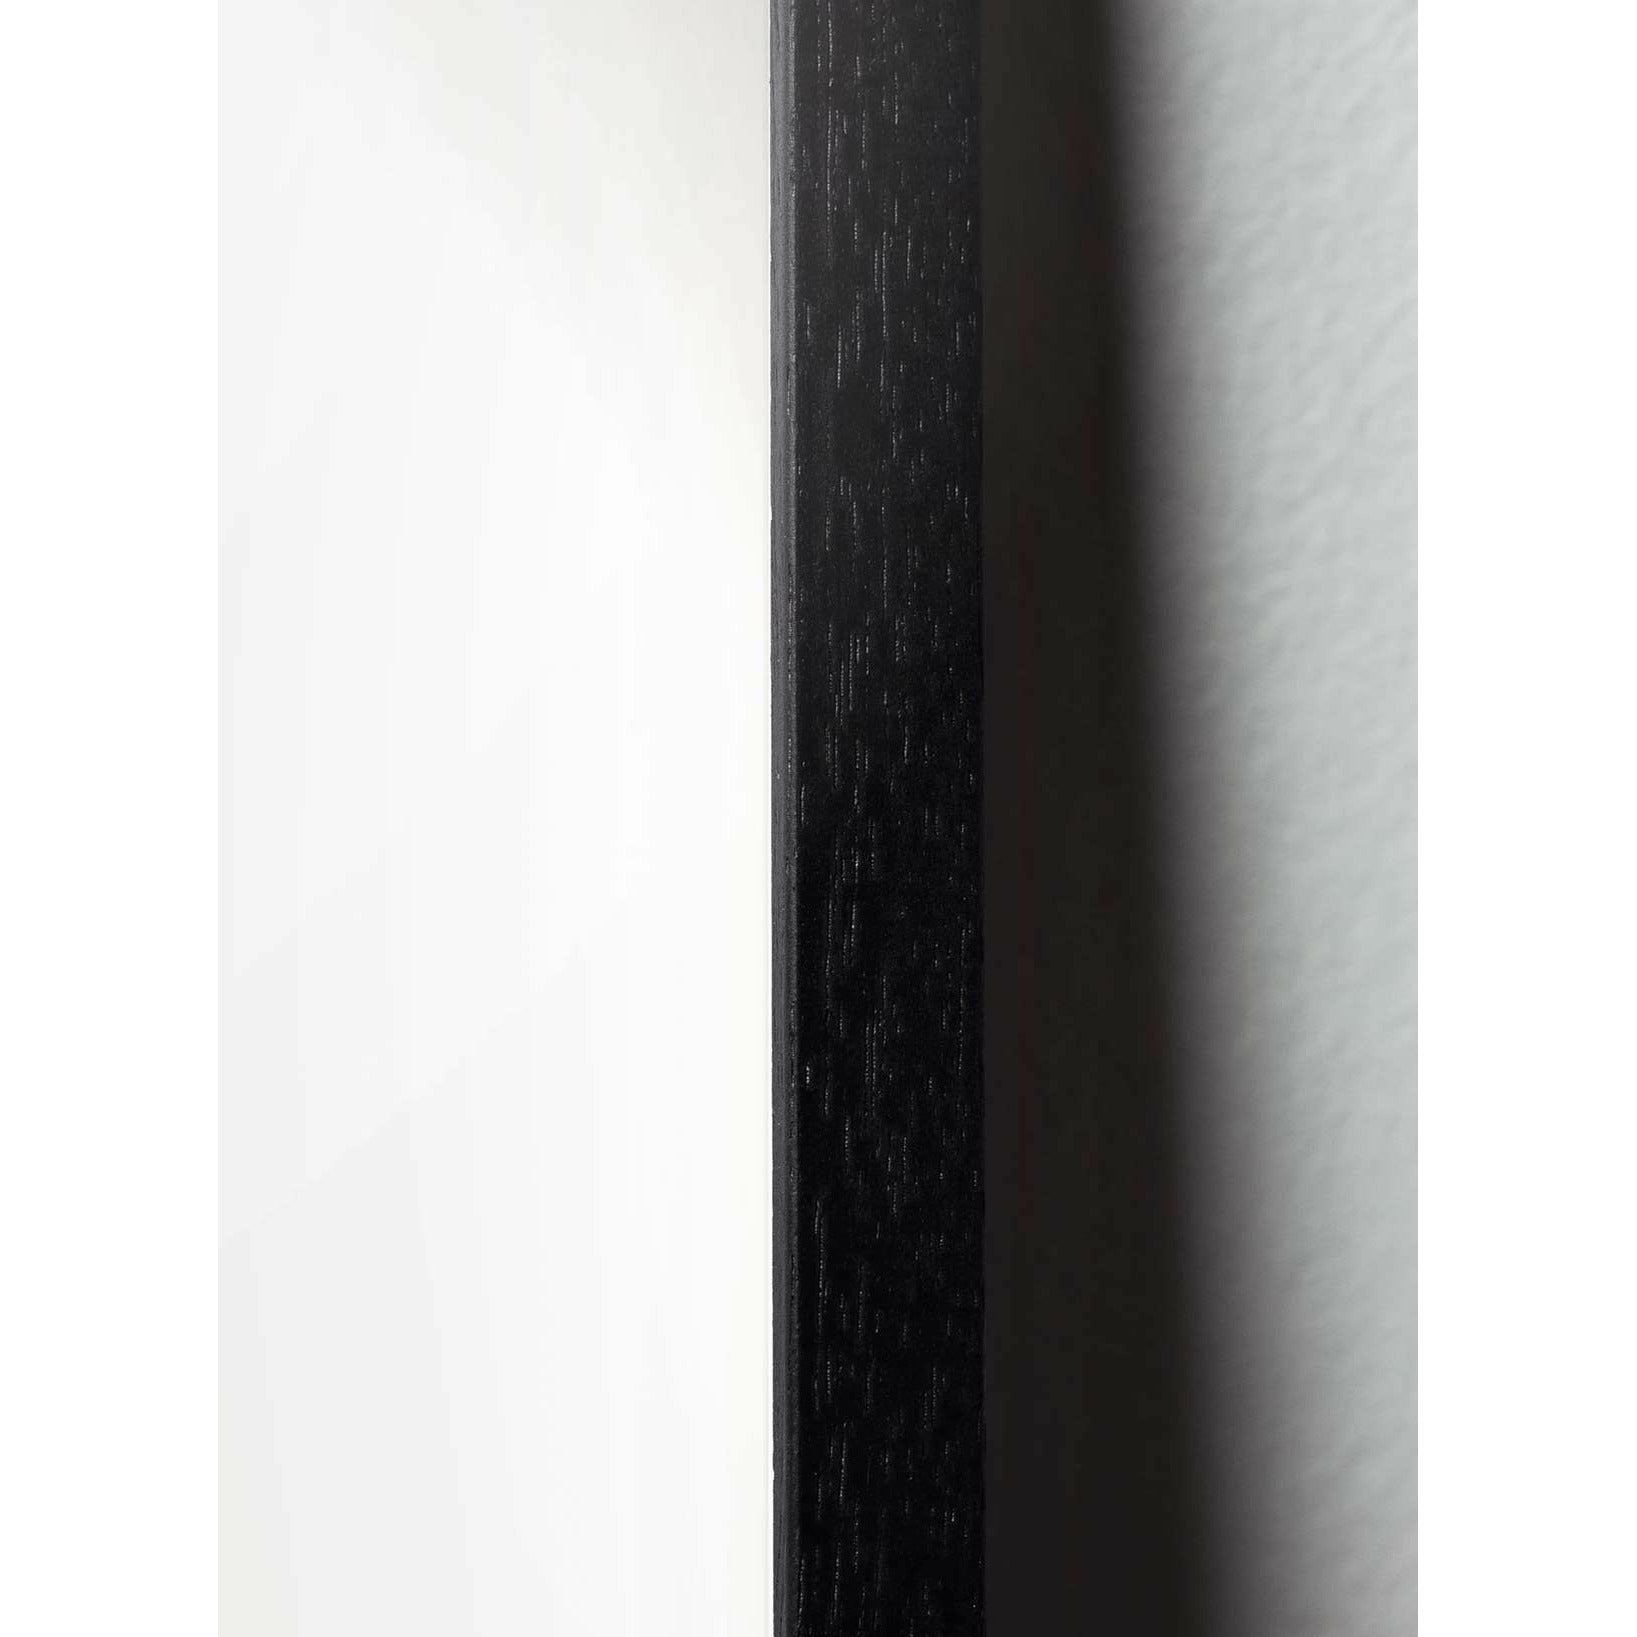 Brainchild Swan Paper Clip plakat, ramme i sort lakeret træ 50x70 cm, lyserød baggrund